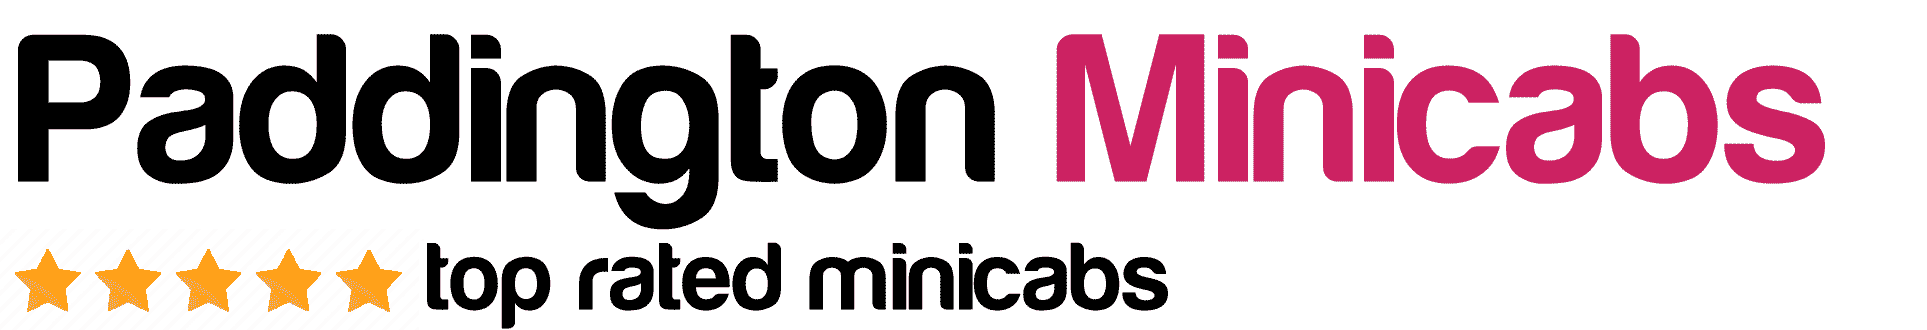 Paddington Minicabs local minicabs in London